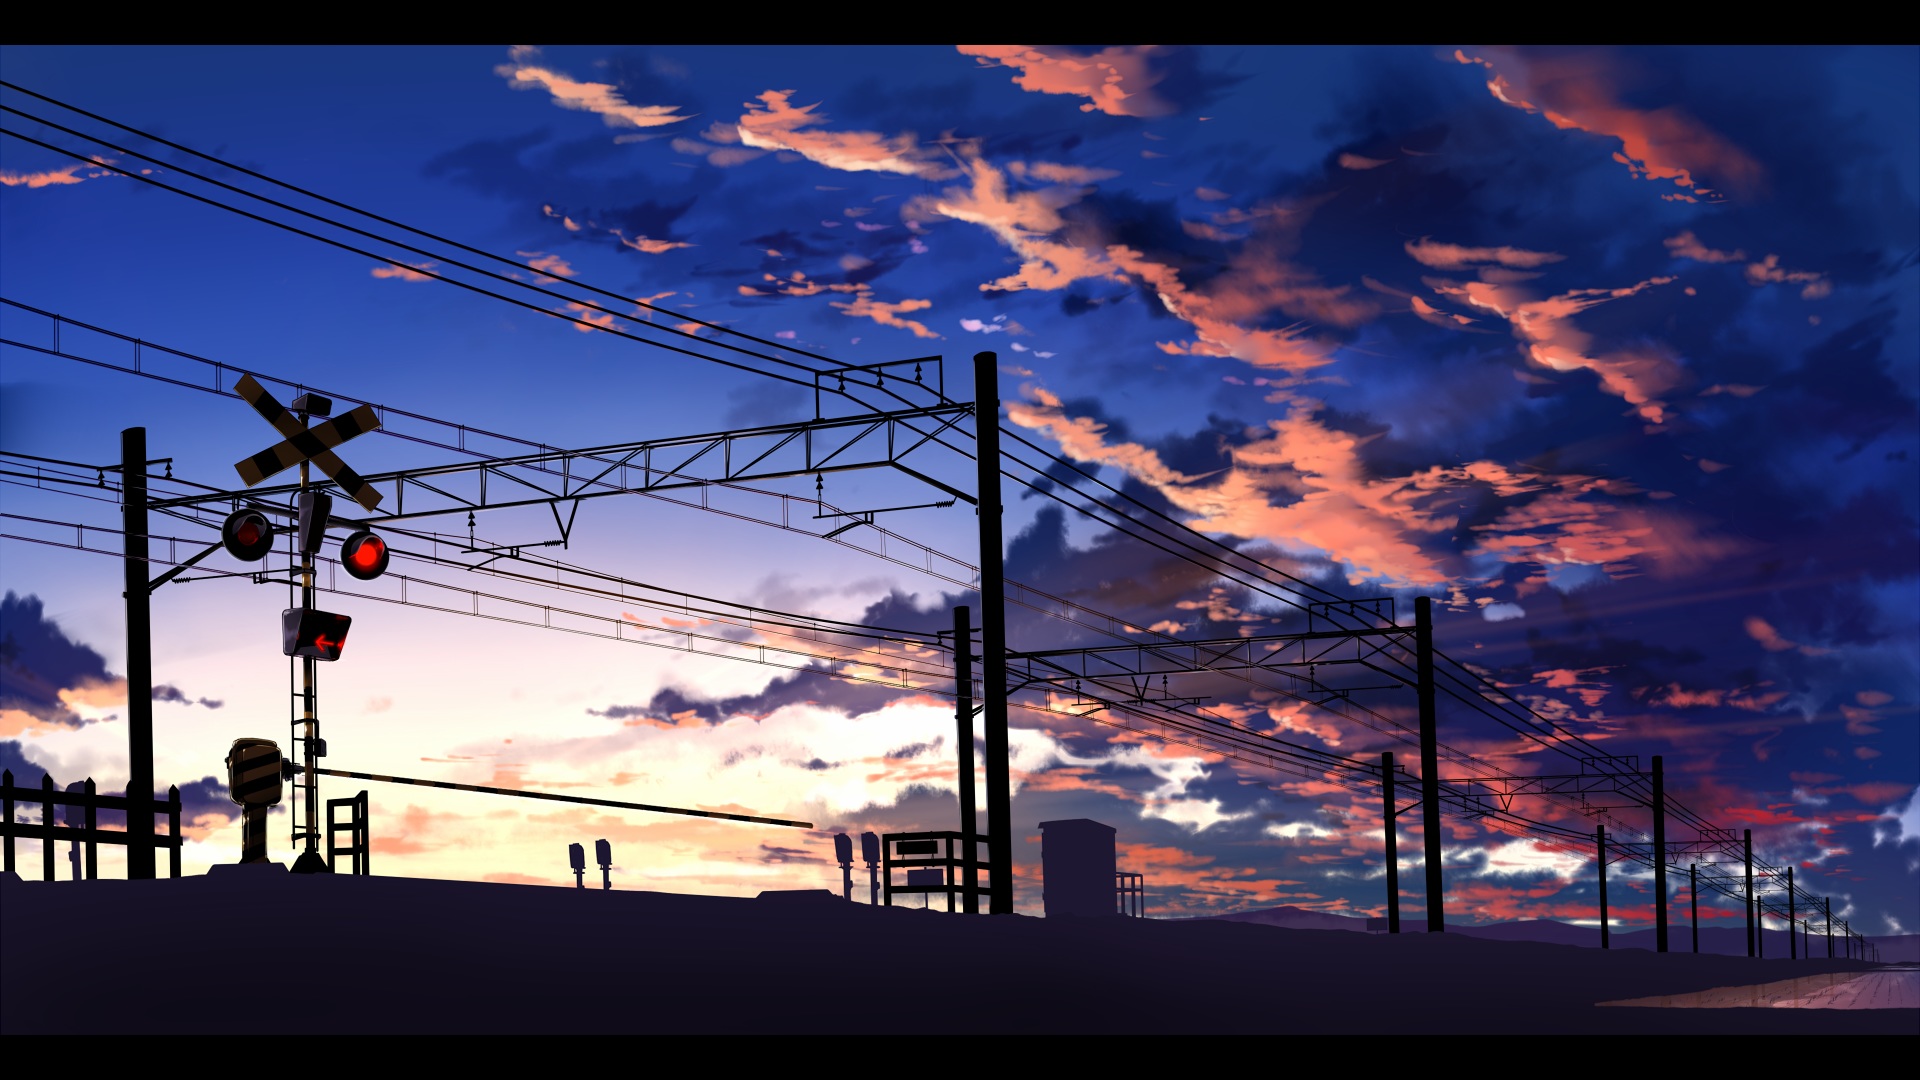 Anime Train Station Power Lines Clouds Traffic Lights Railway Crossing Utility Pole Artwork Sky Dark 1920x1080